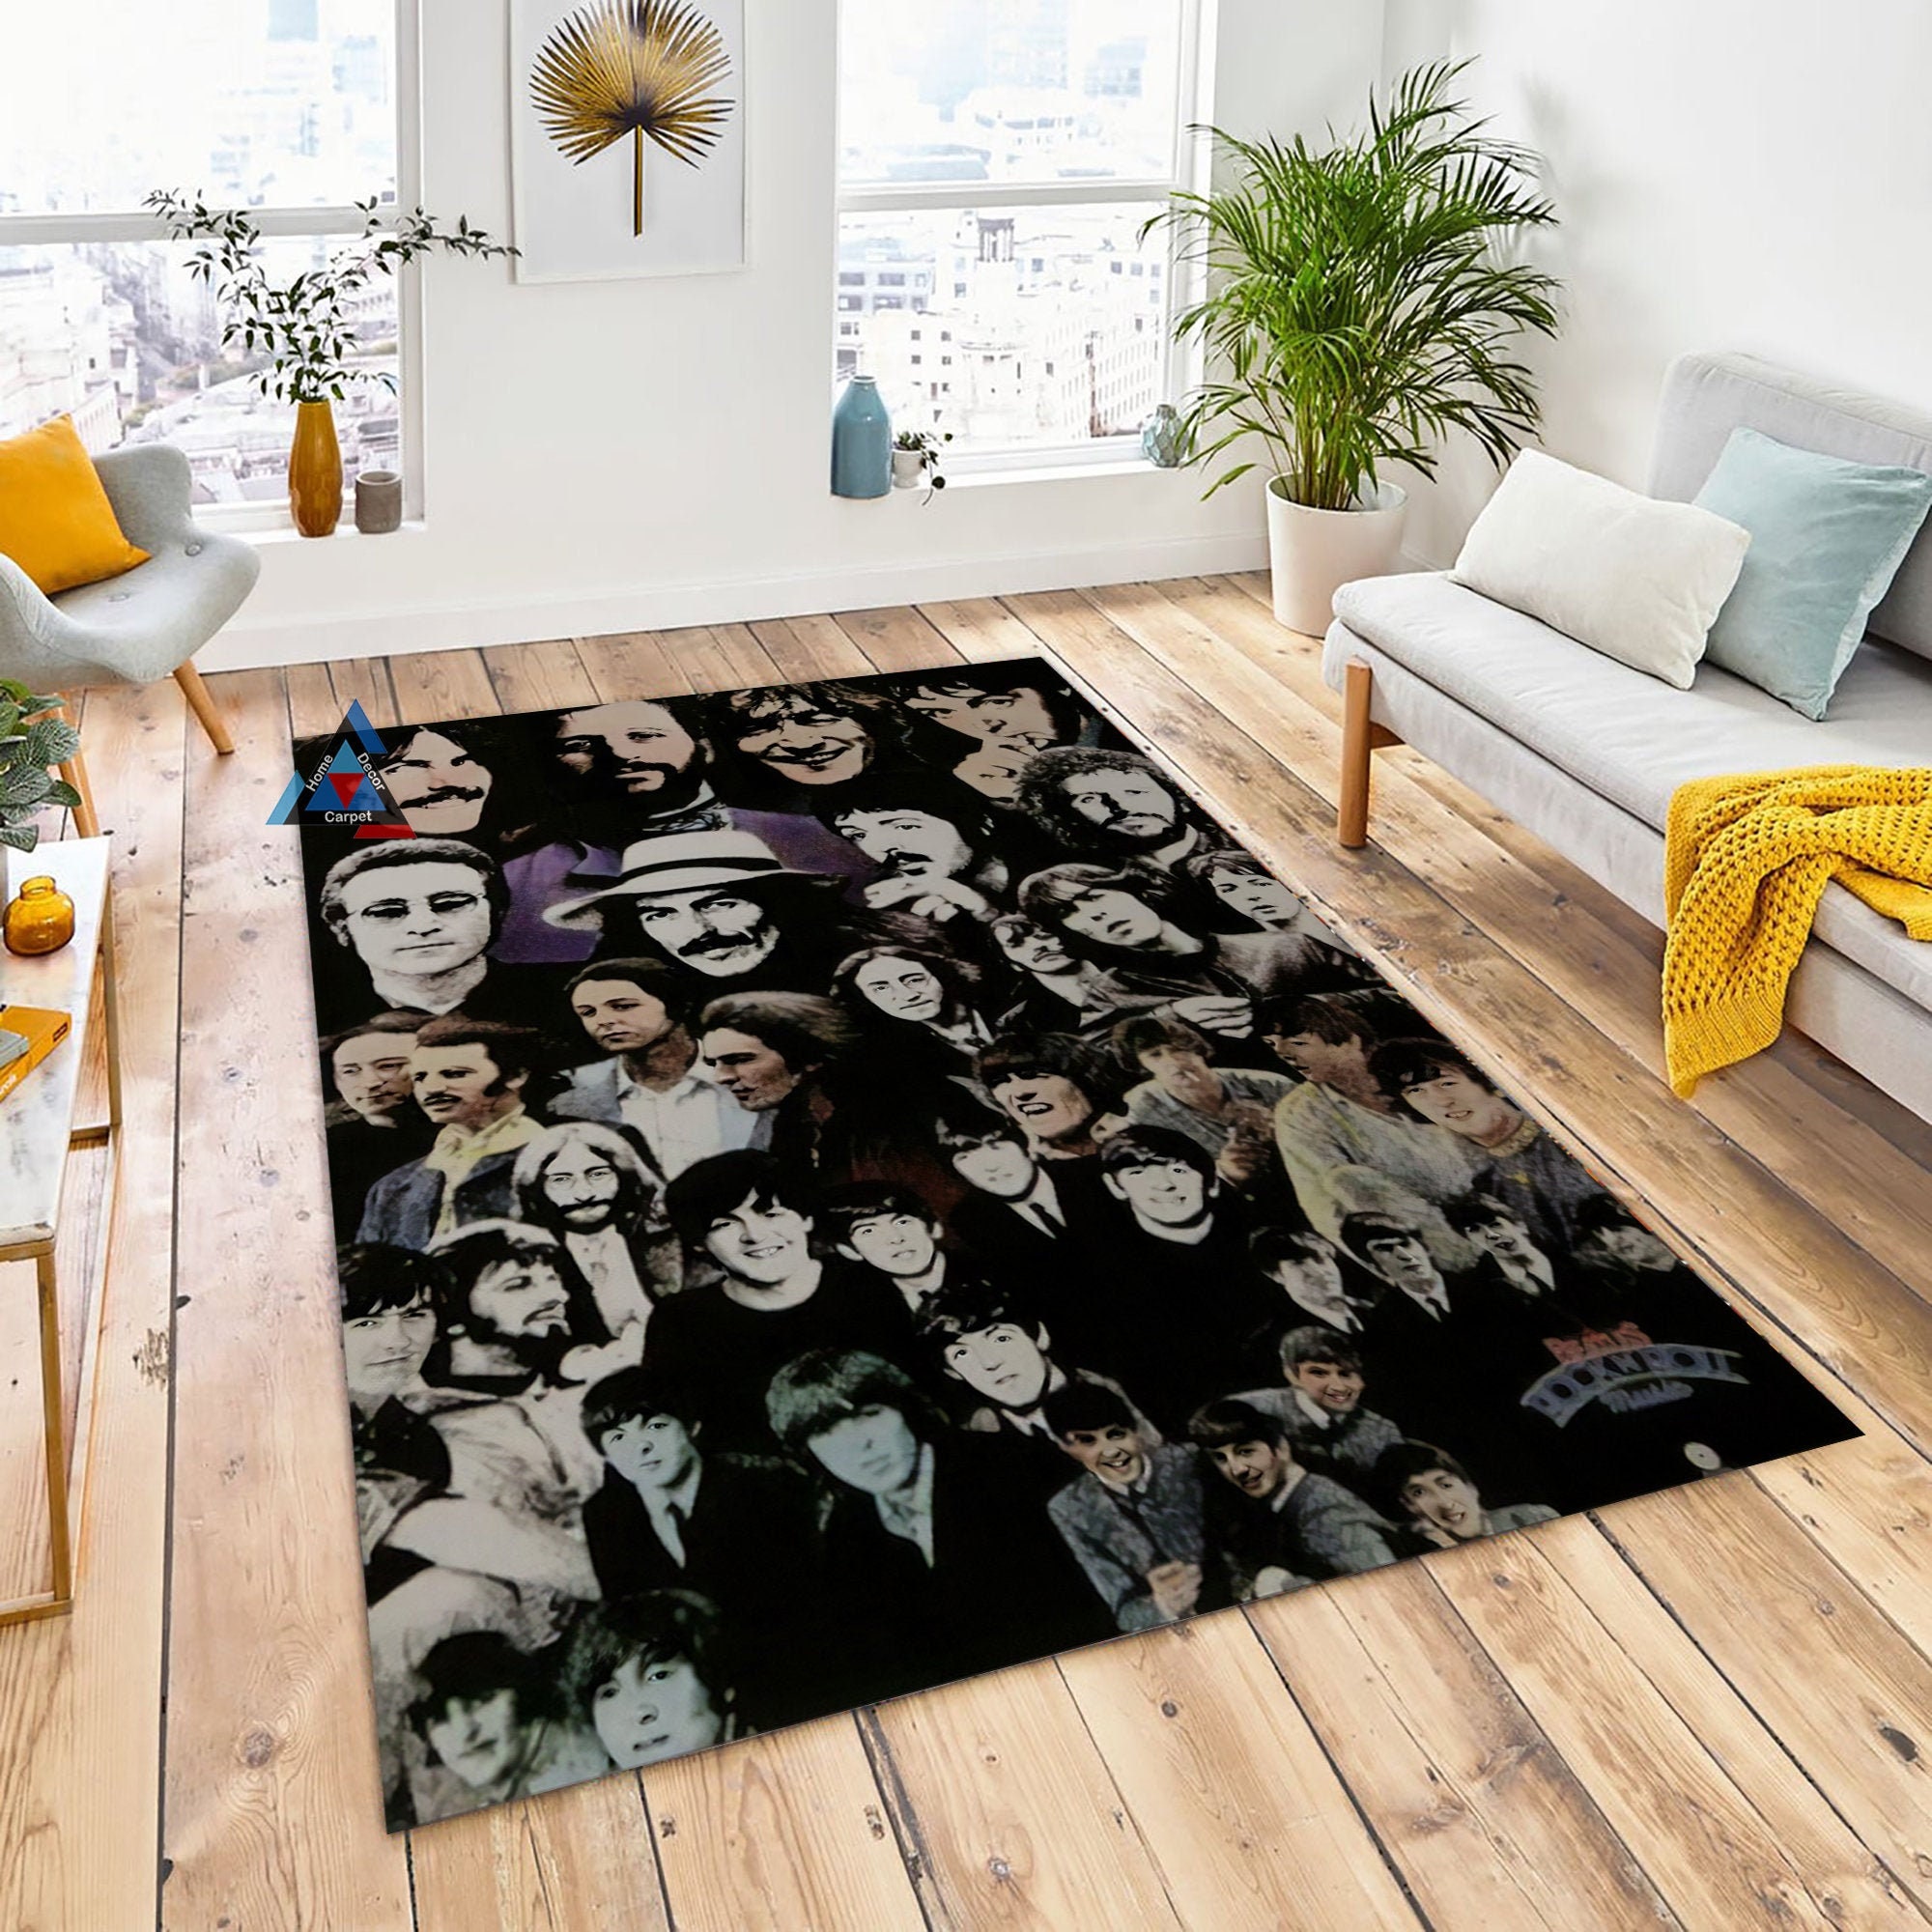 Beatles Rug Carpet Beatles Rug Beatles Carpet Fan Carpet | Etsy